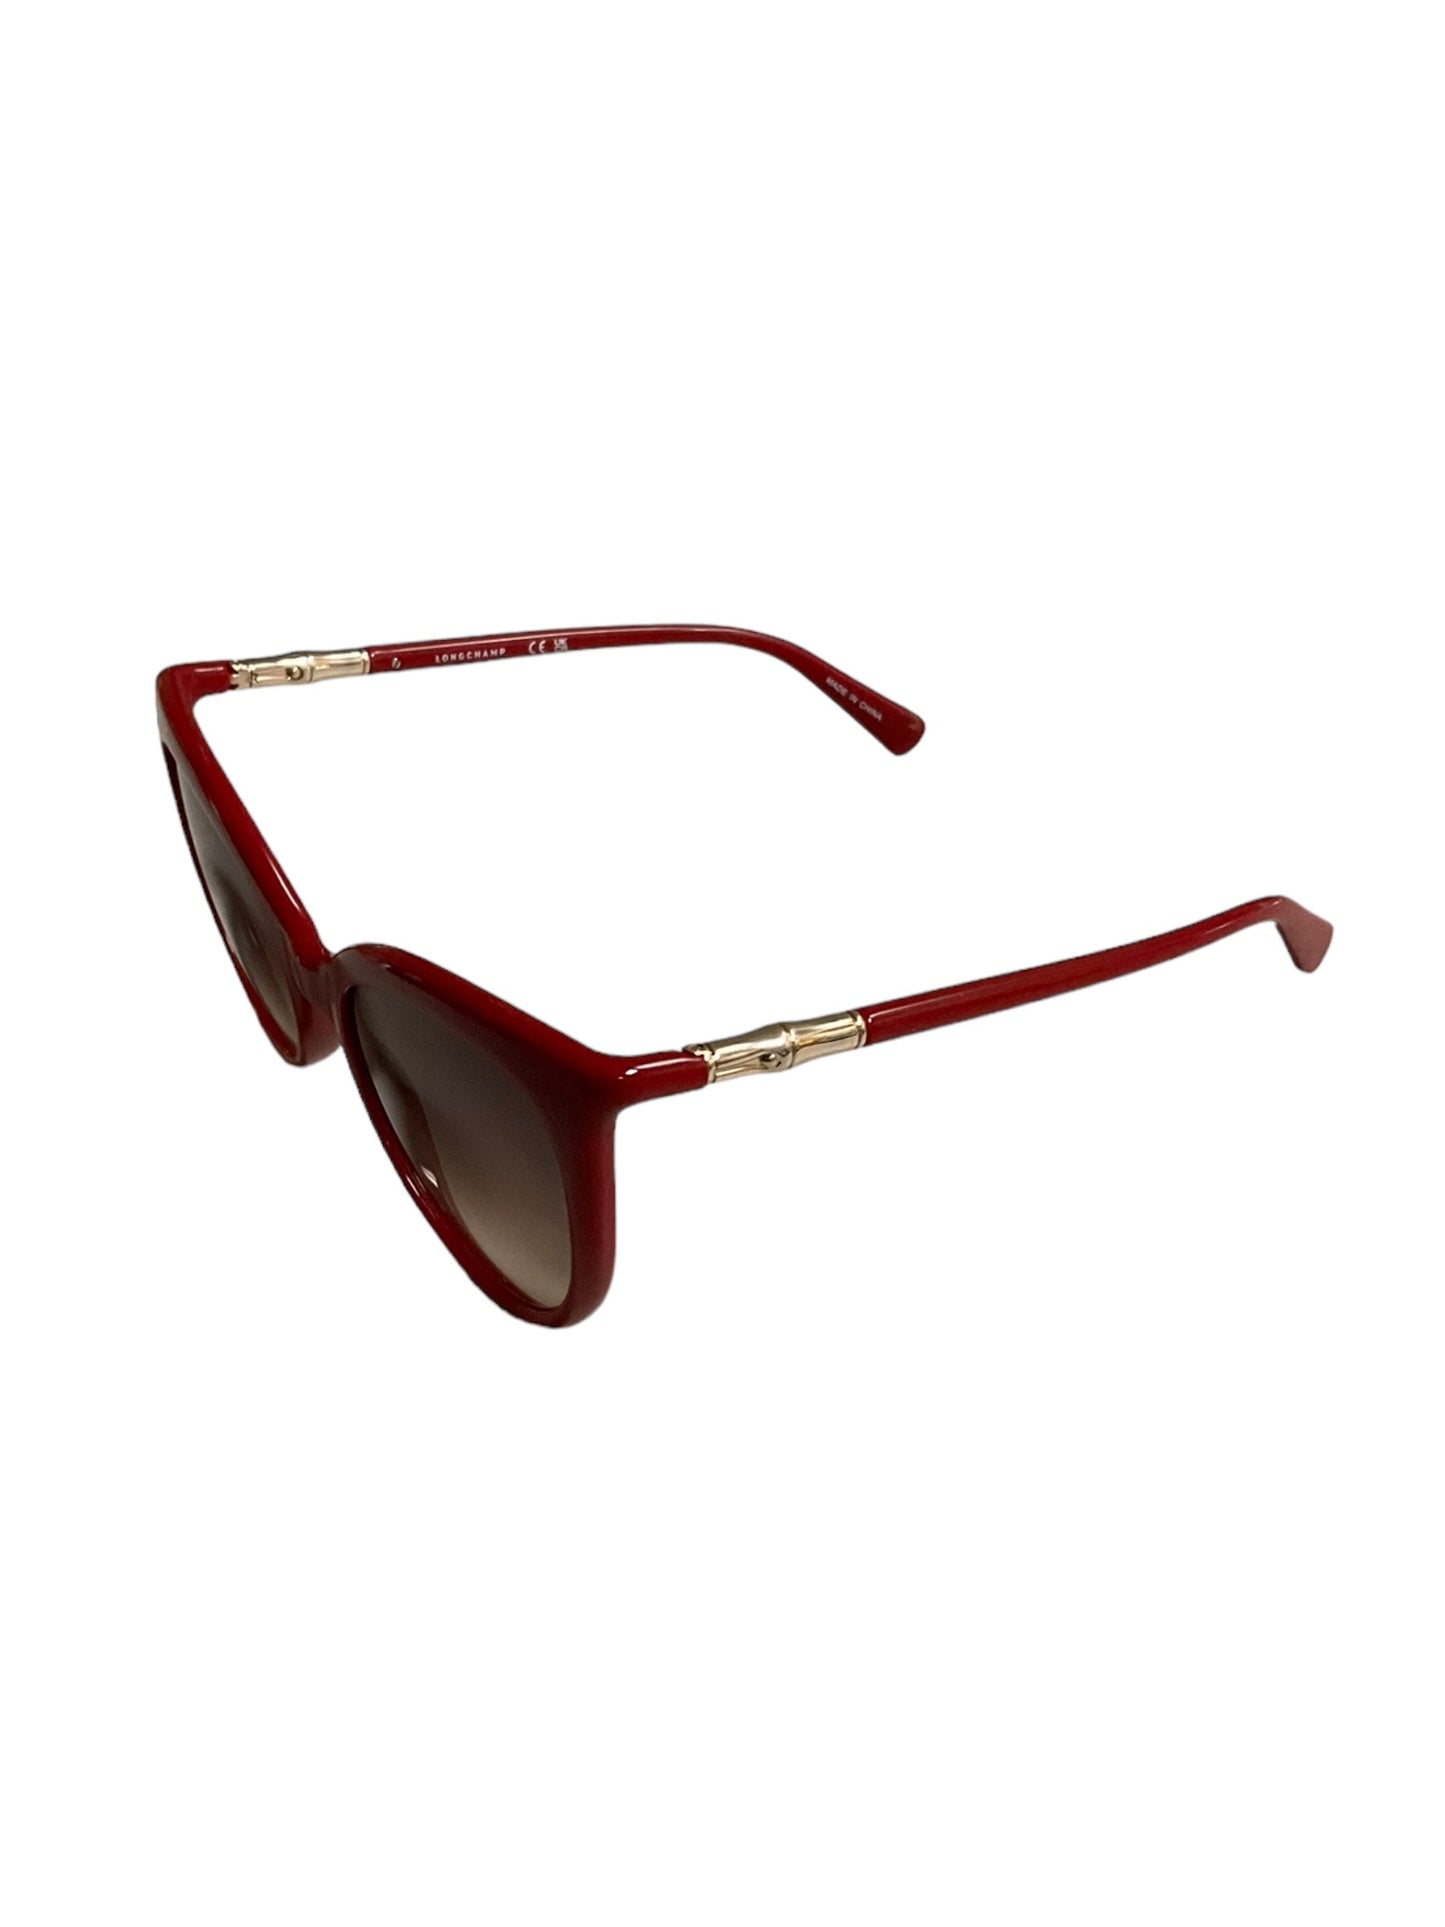 Sunglasses Designer Longchamp